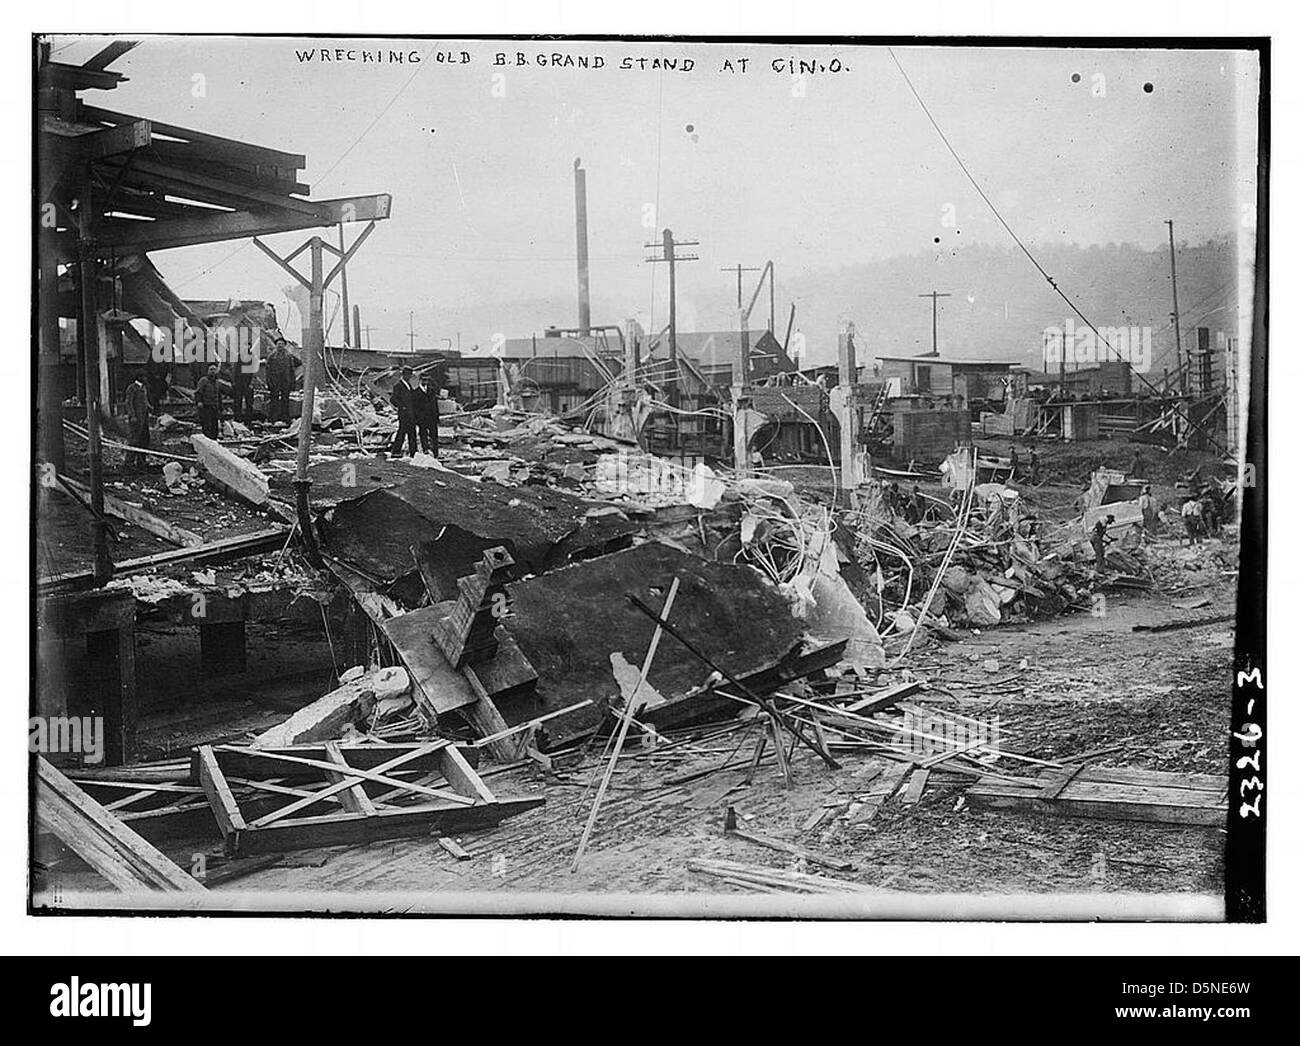 [Wrecking Palace of the Fans ballpark, Cincinnati (baseball)] (LOC) Stock Photo